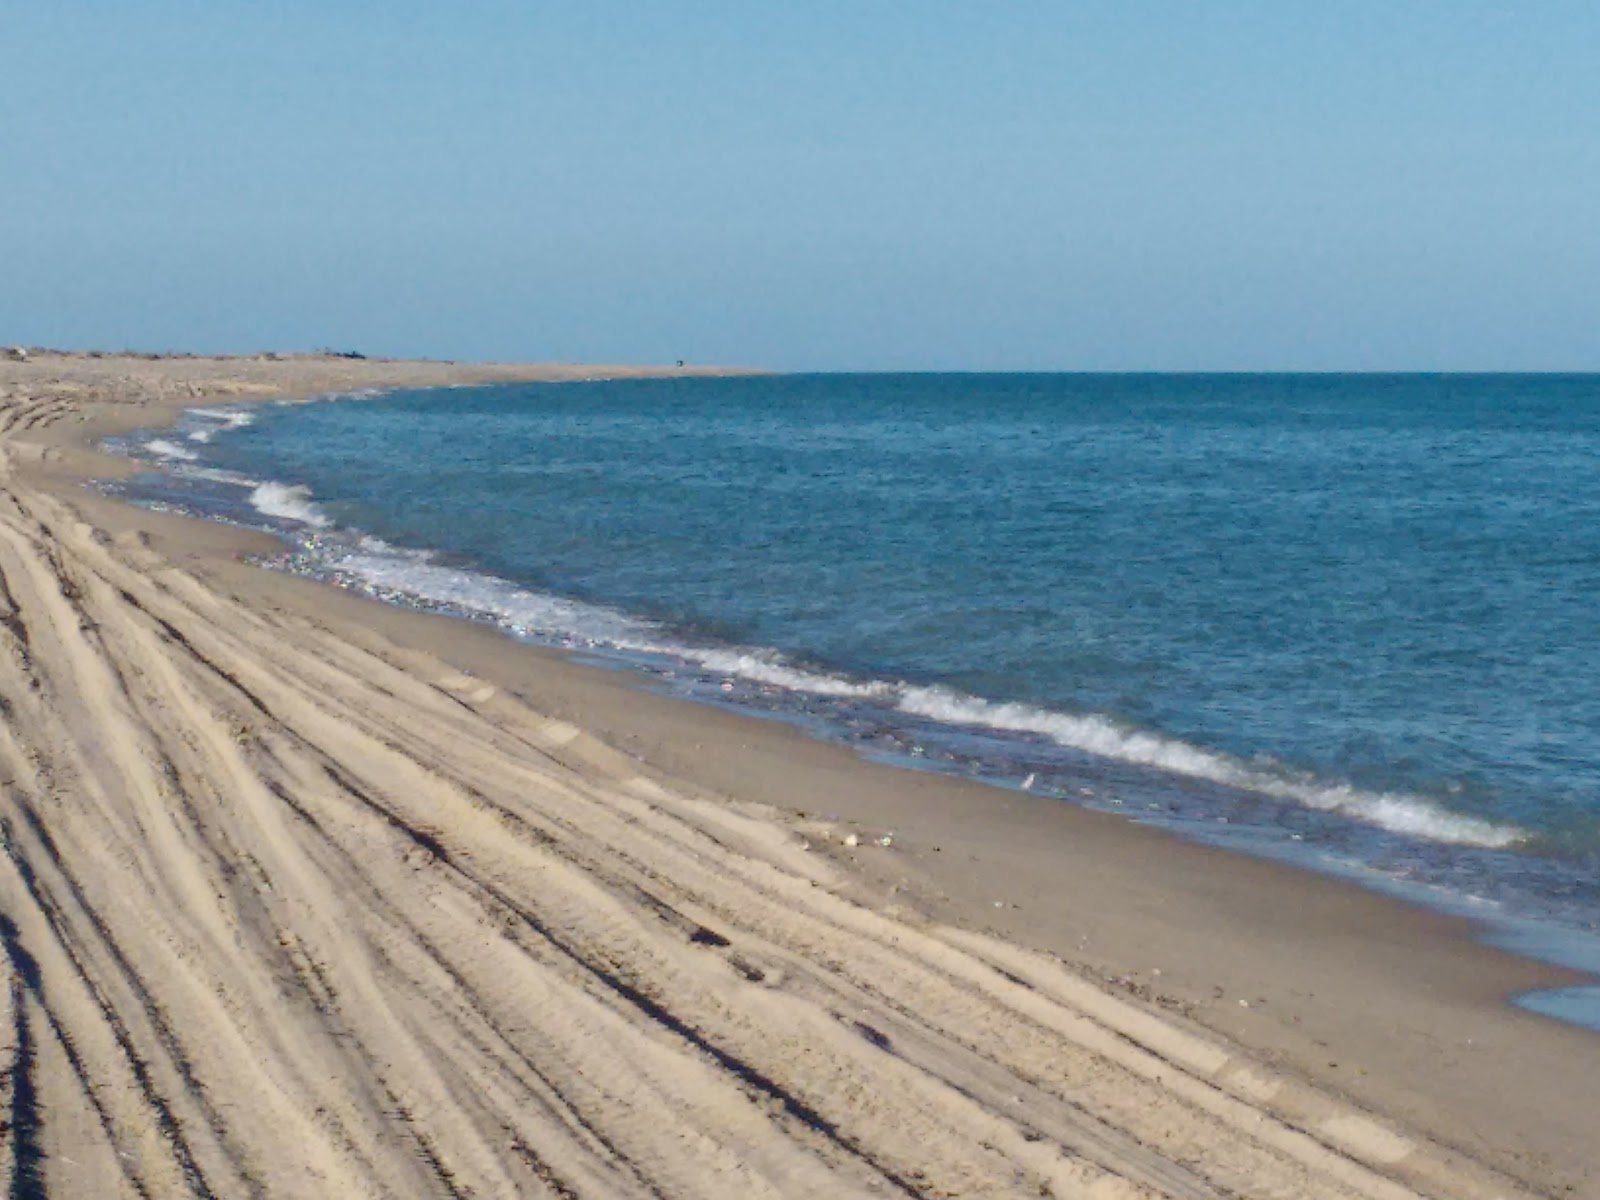 Valokuva Playa El Porvenirista. pinnalla kirkas hiekka:n kanssa